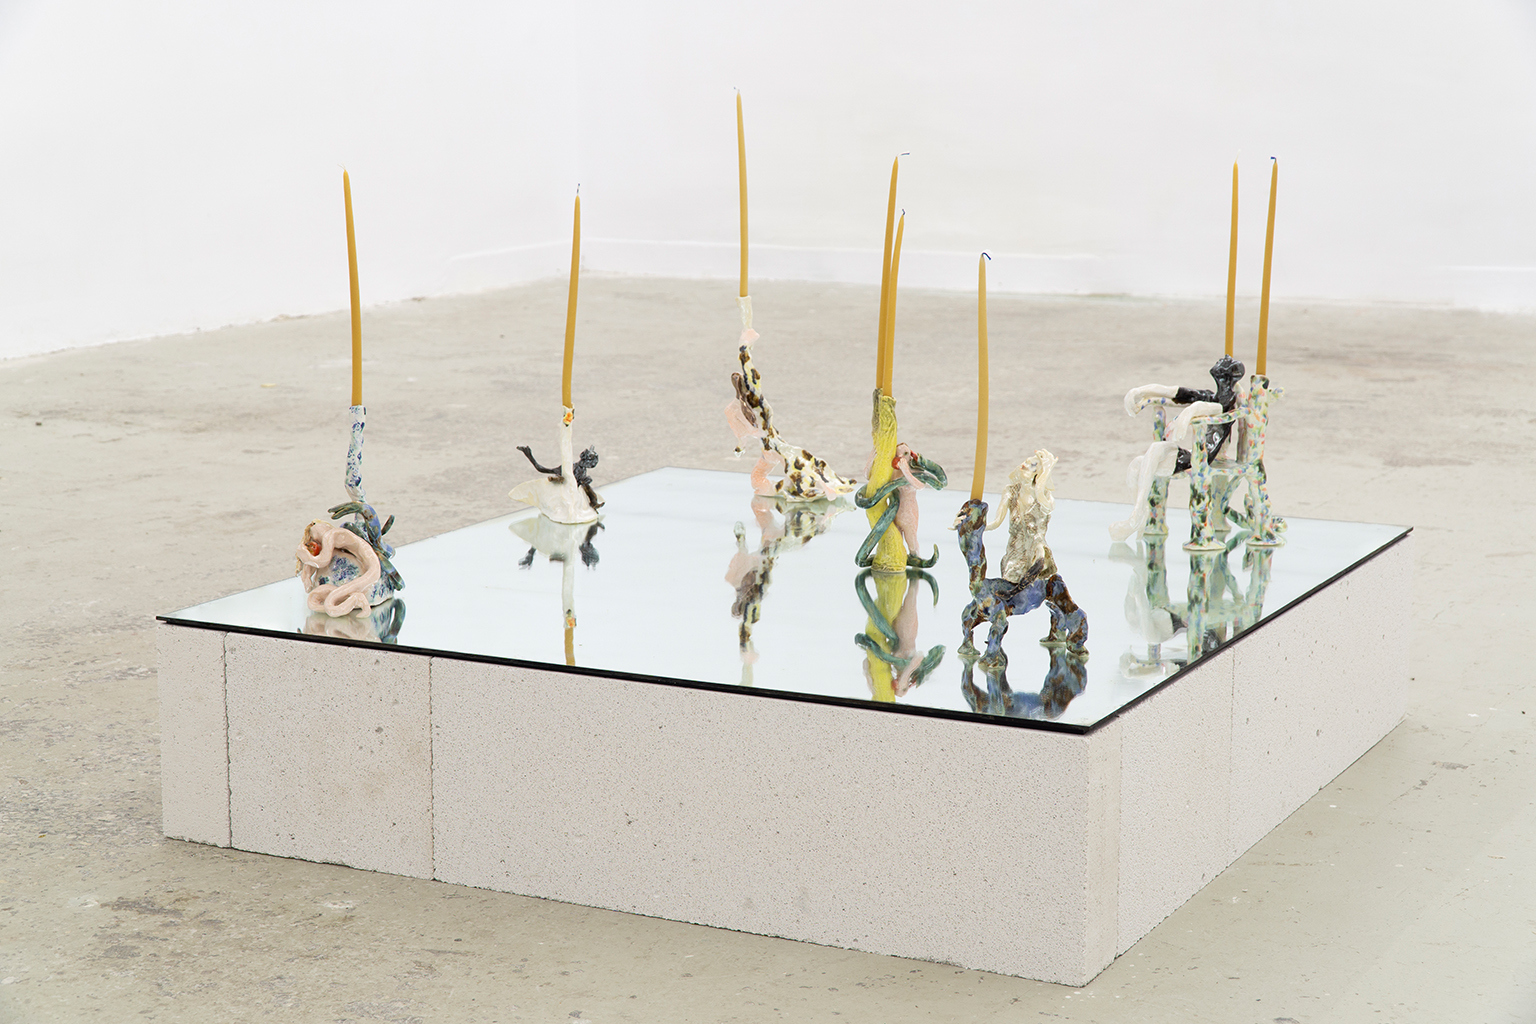 Ana Botezatu, "A pile of anxieties", glazed ceramics, variable dimensions, 2020